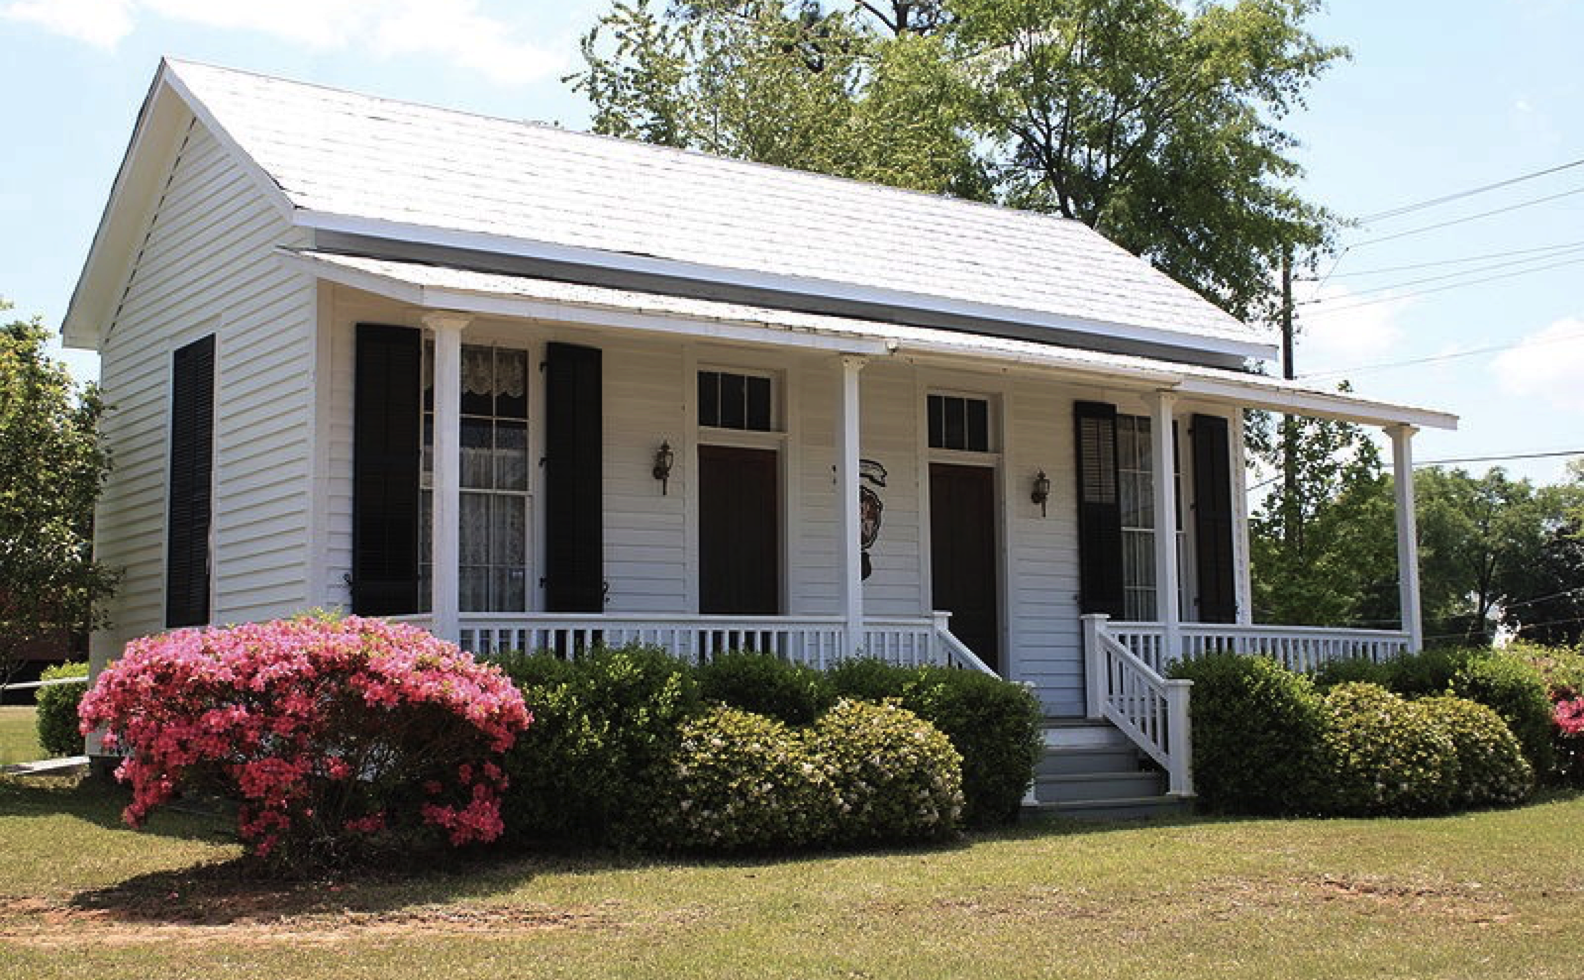 Hygeia Hotel Cottage Museum, Citronelle, Alabama